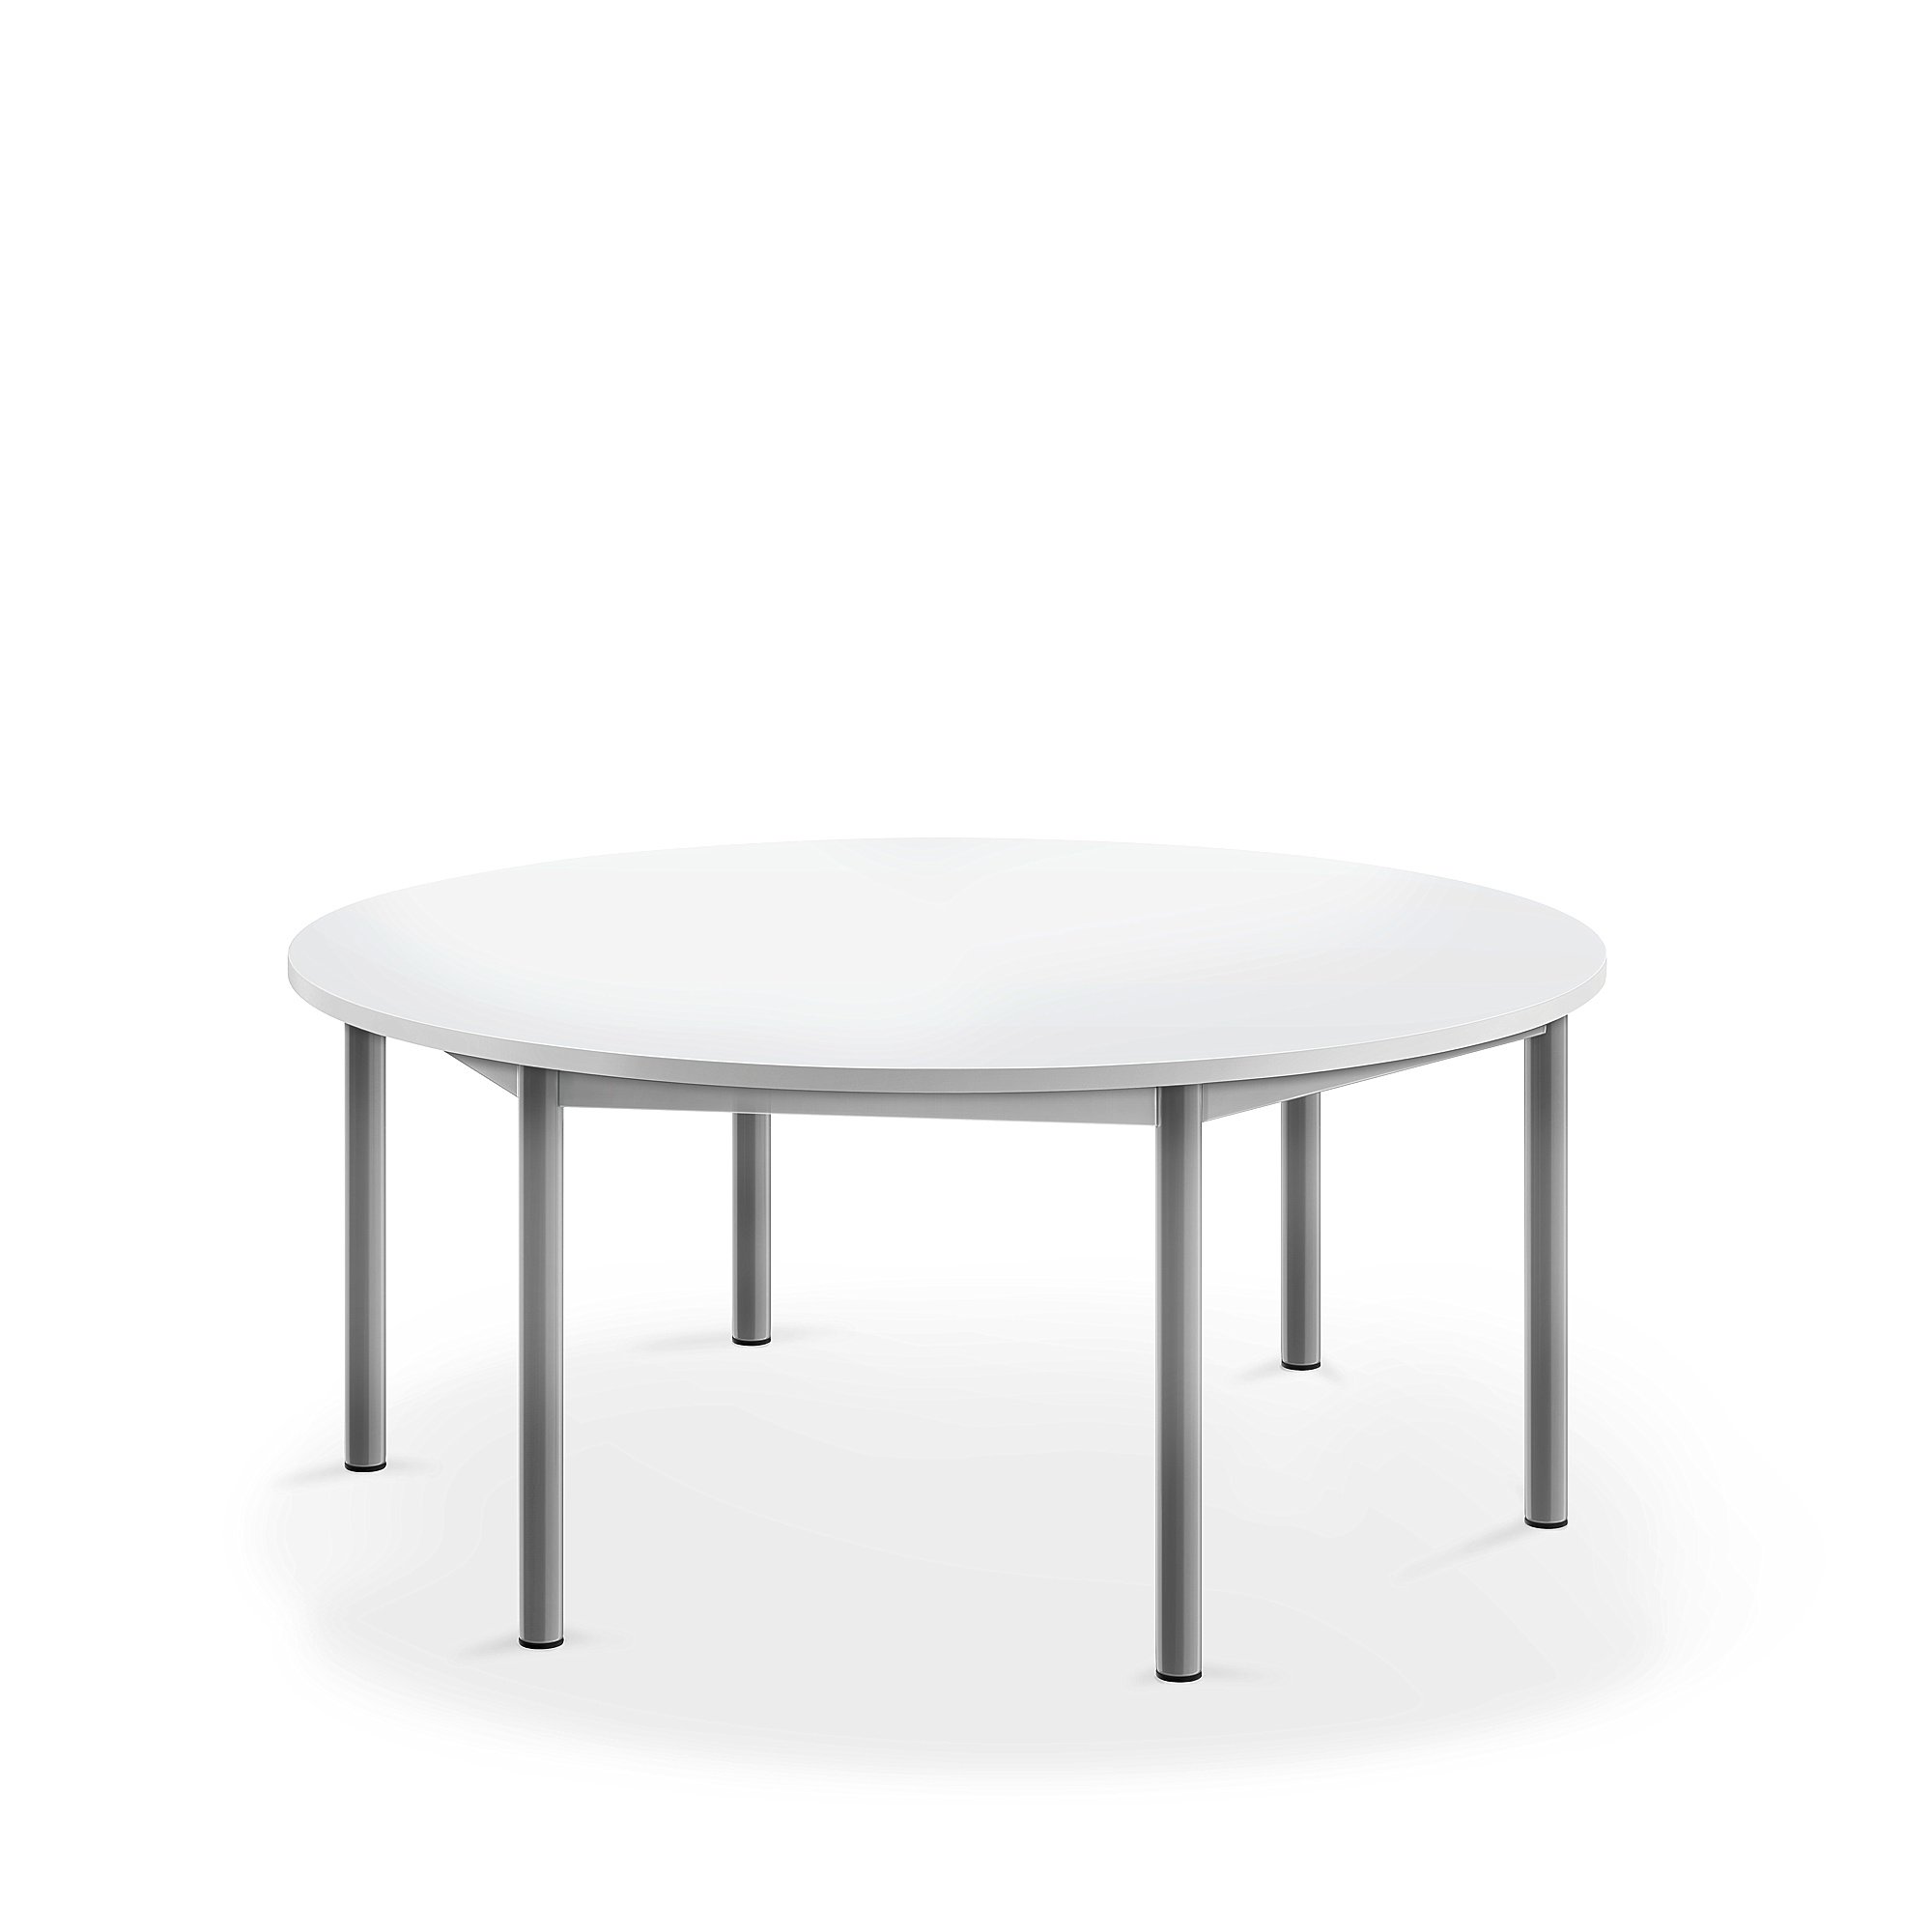 Stůl BORÅS, Ø1200x500 mm, stříbrné nohy, HPL deska, bílá